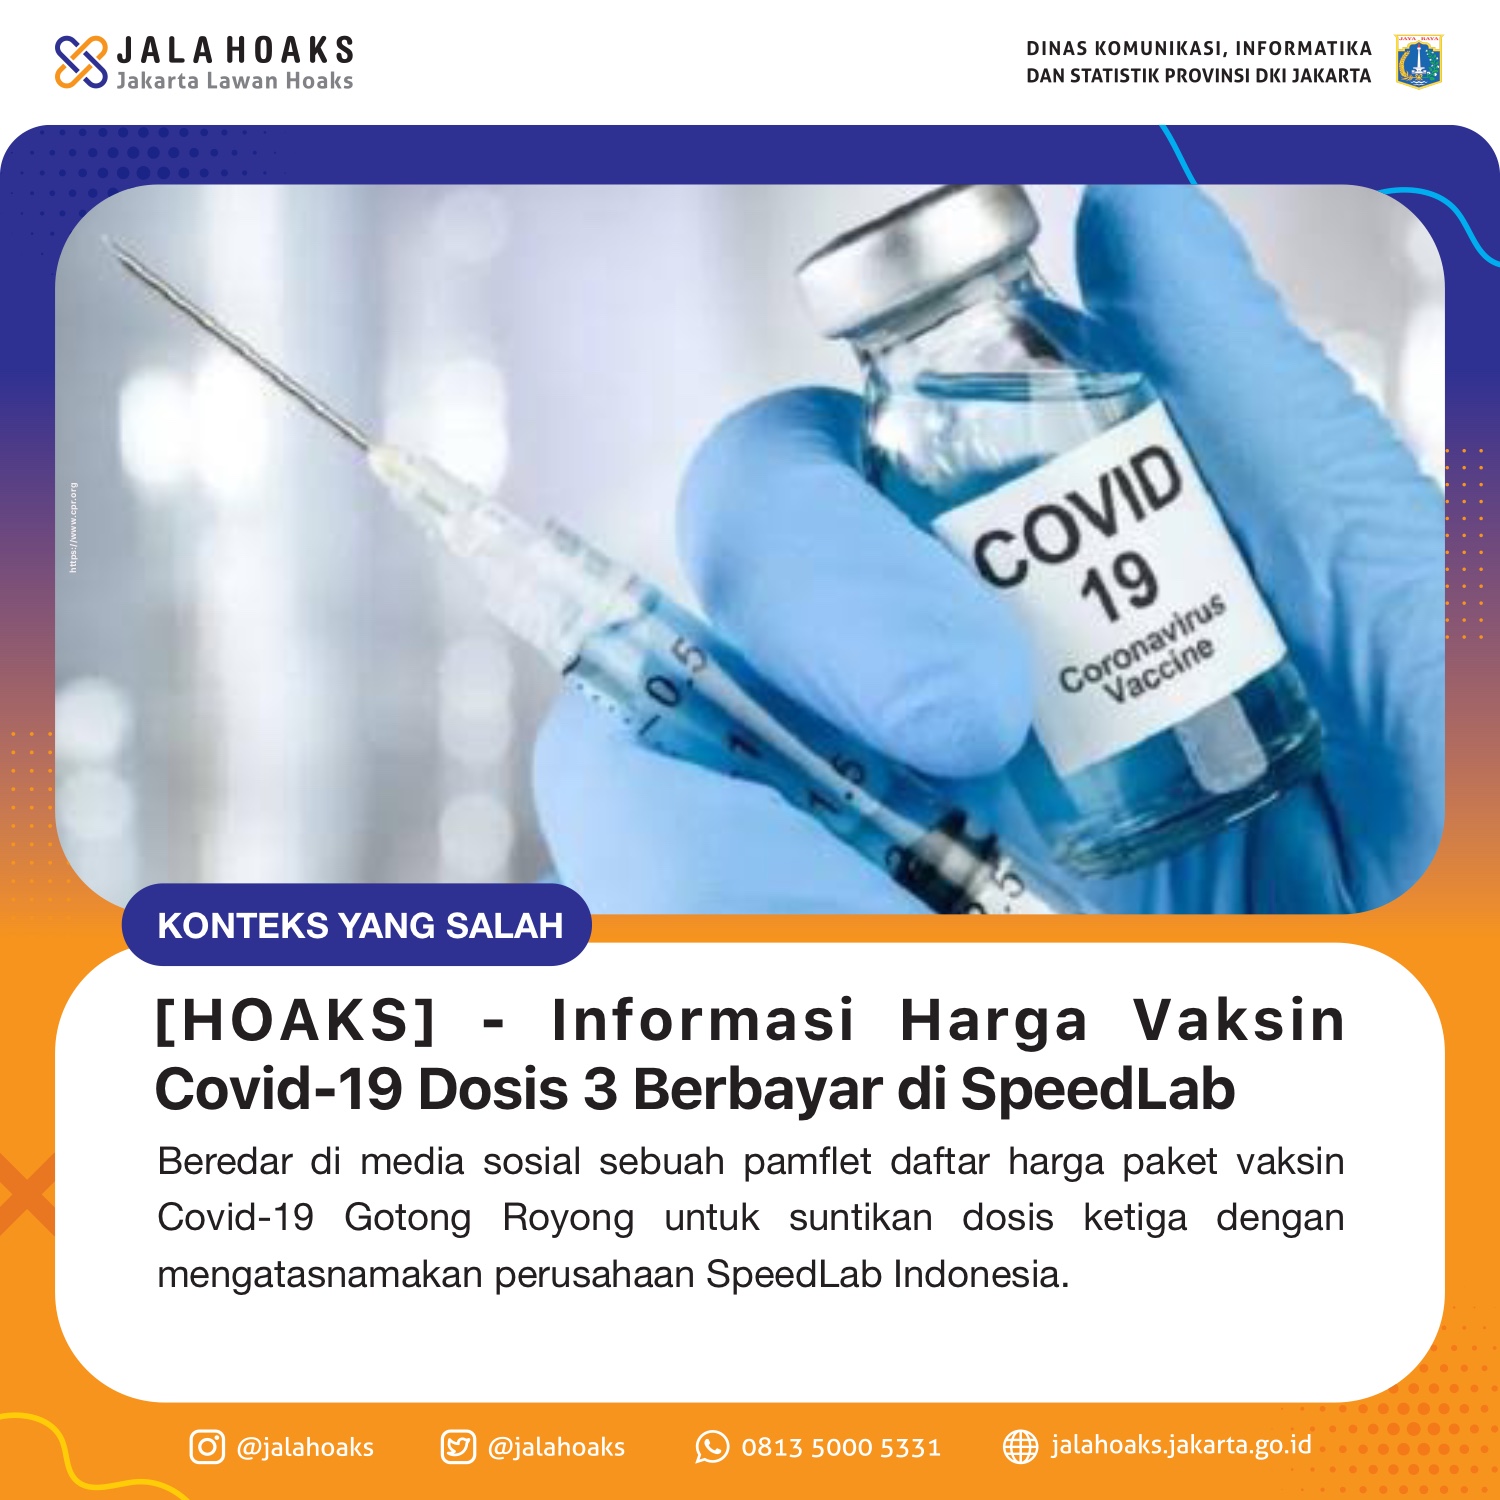 Statistik vaksin covid 19 malaysia